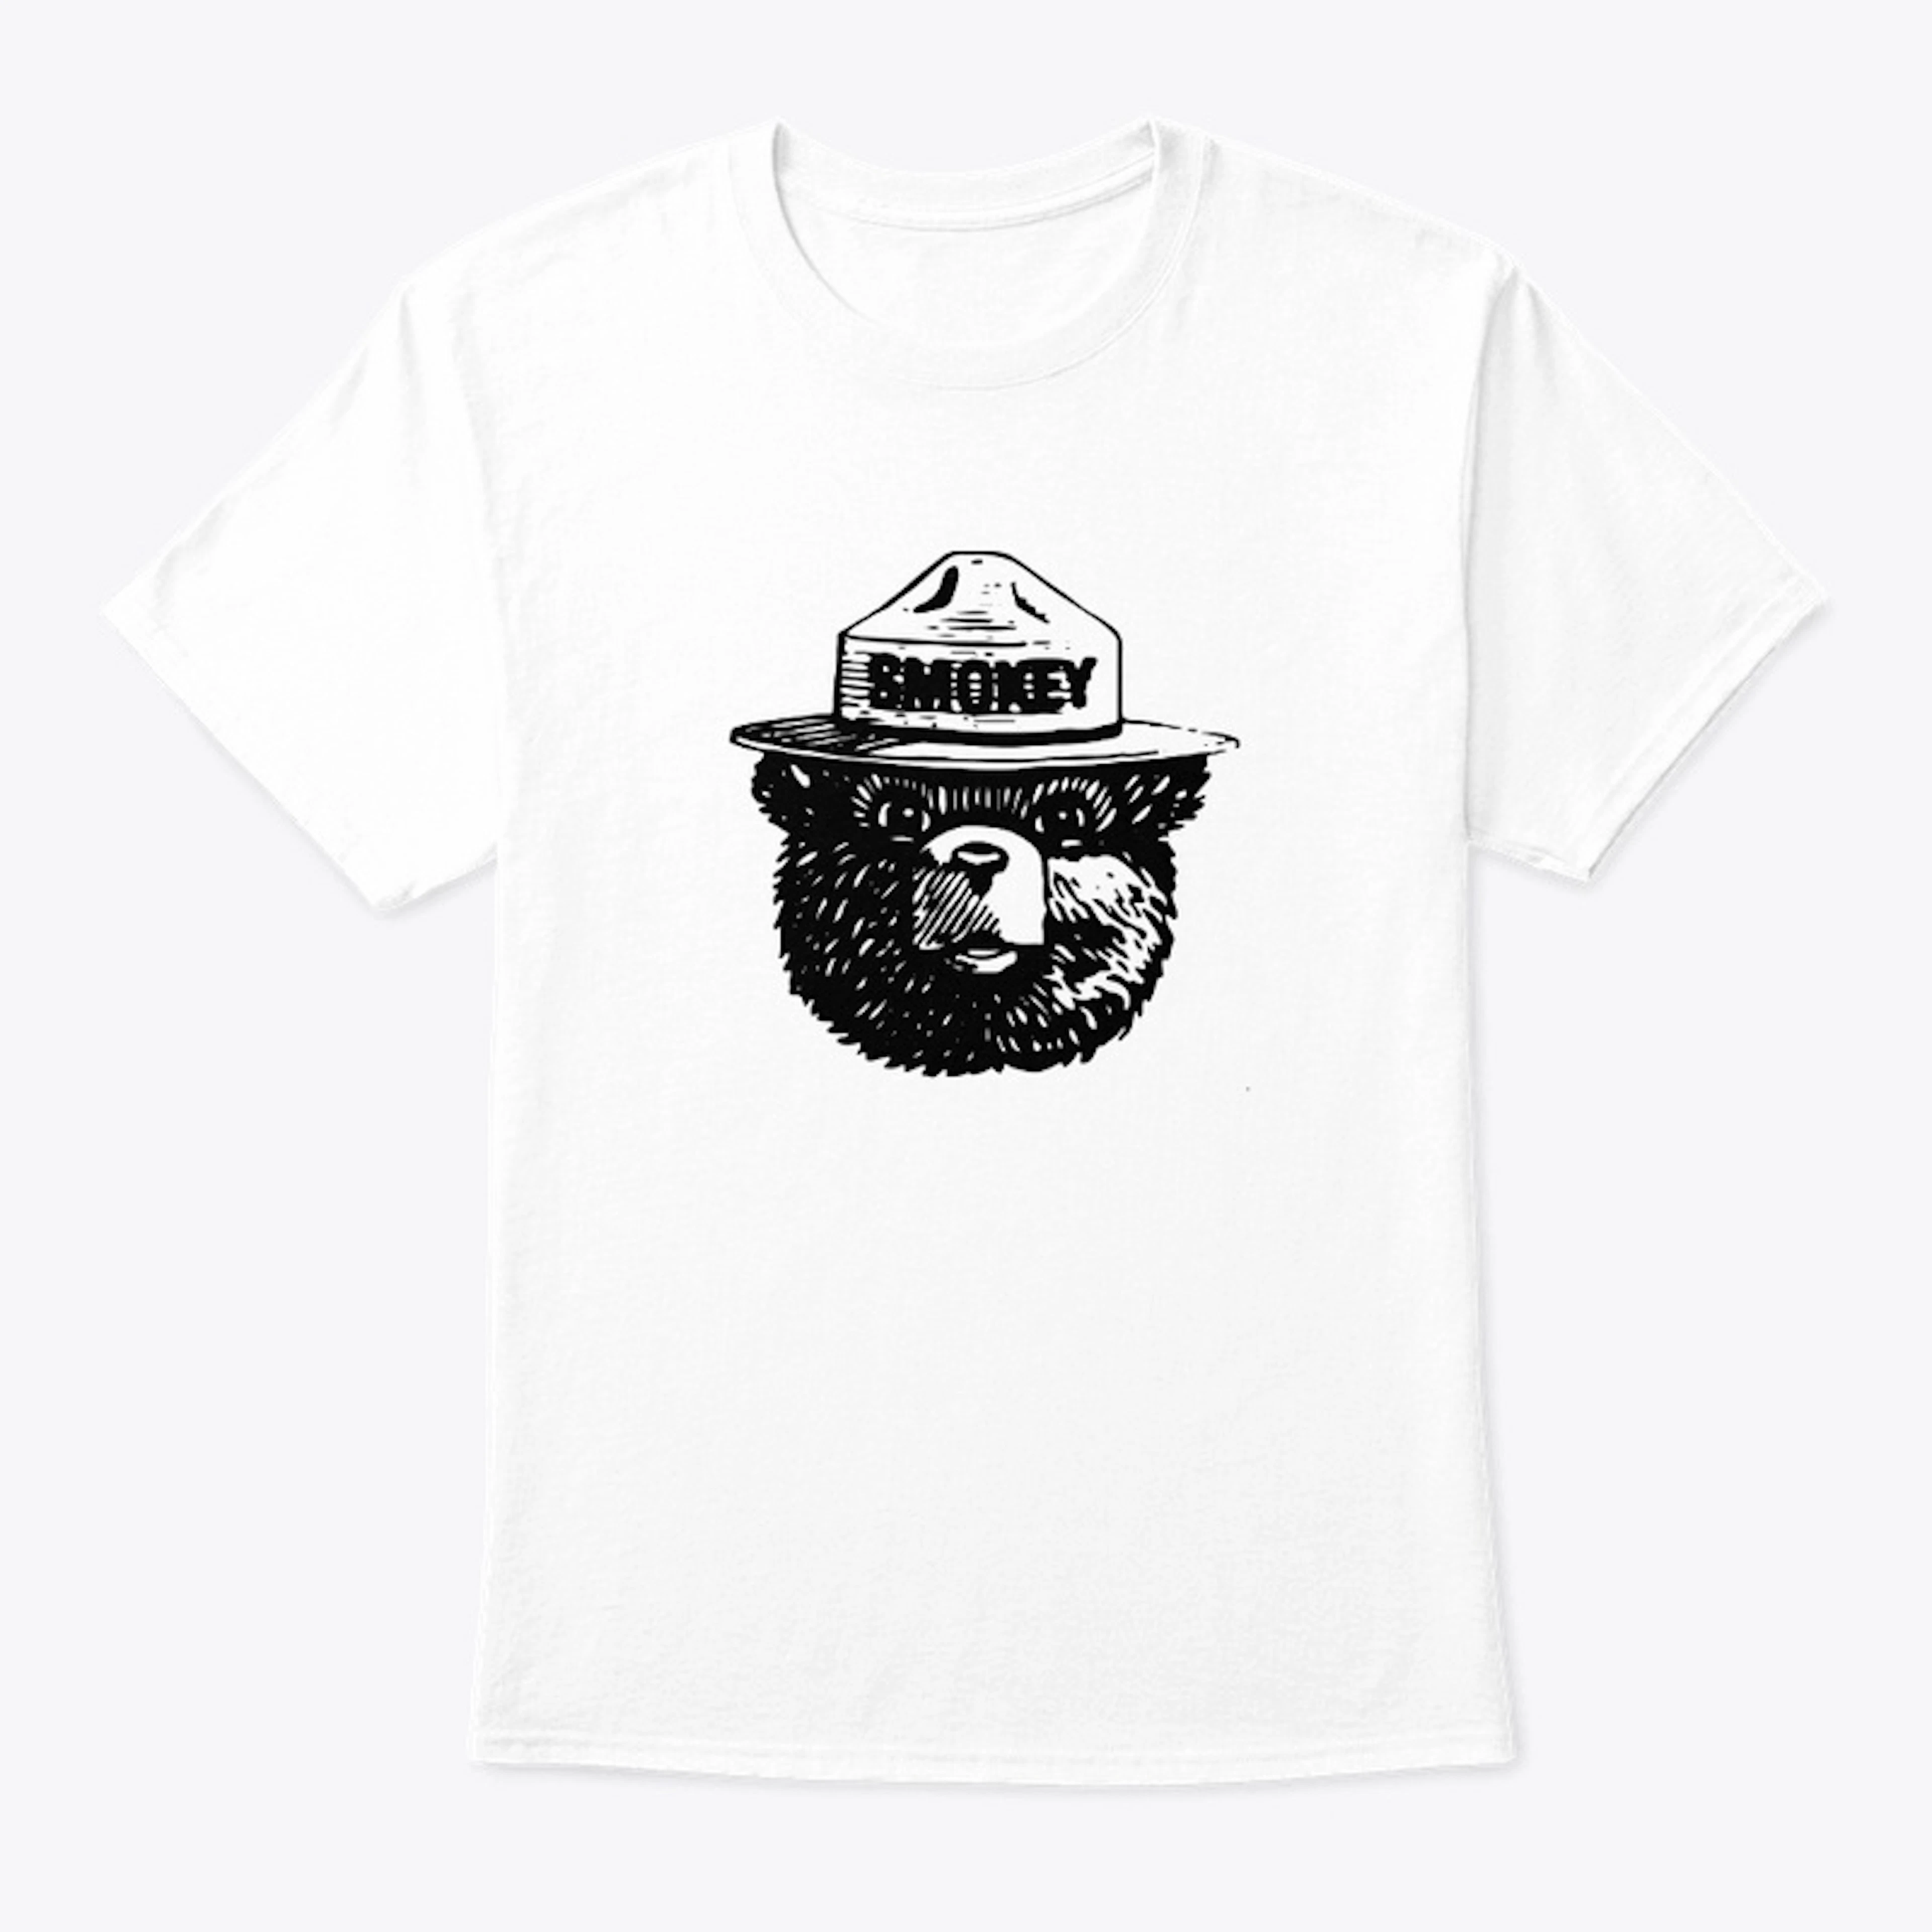 Smokey the Bear T Shirt